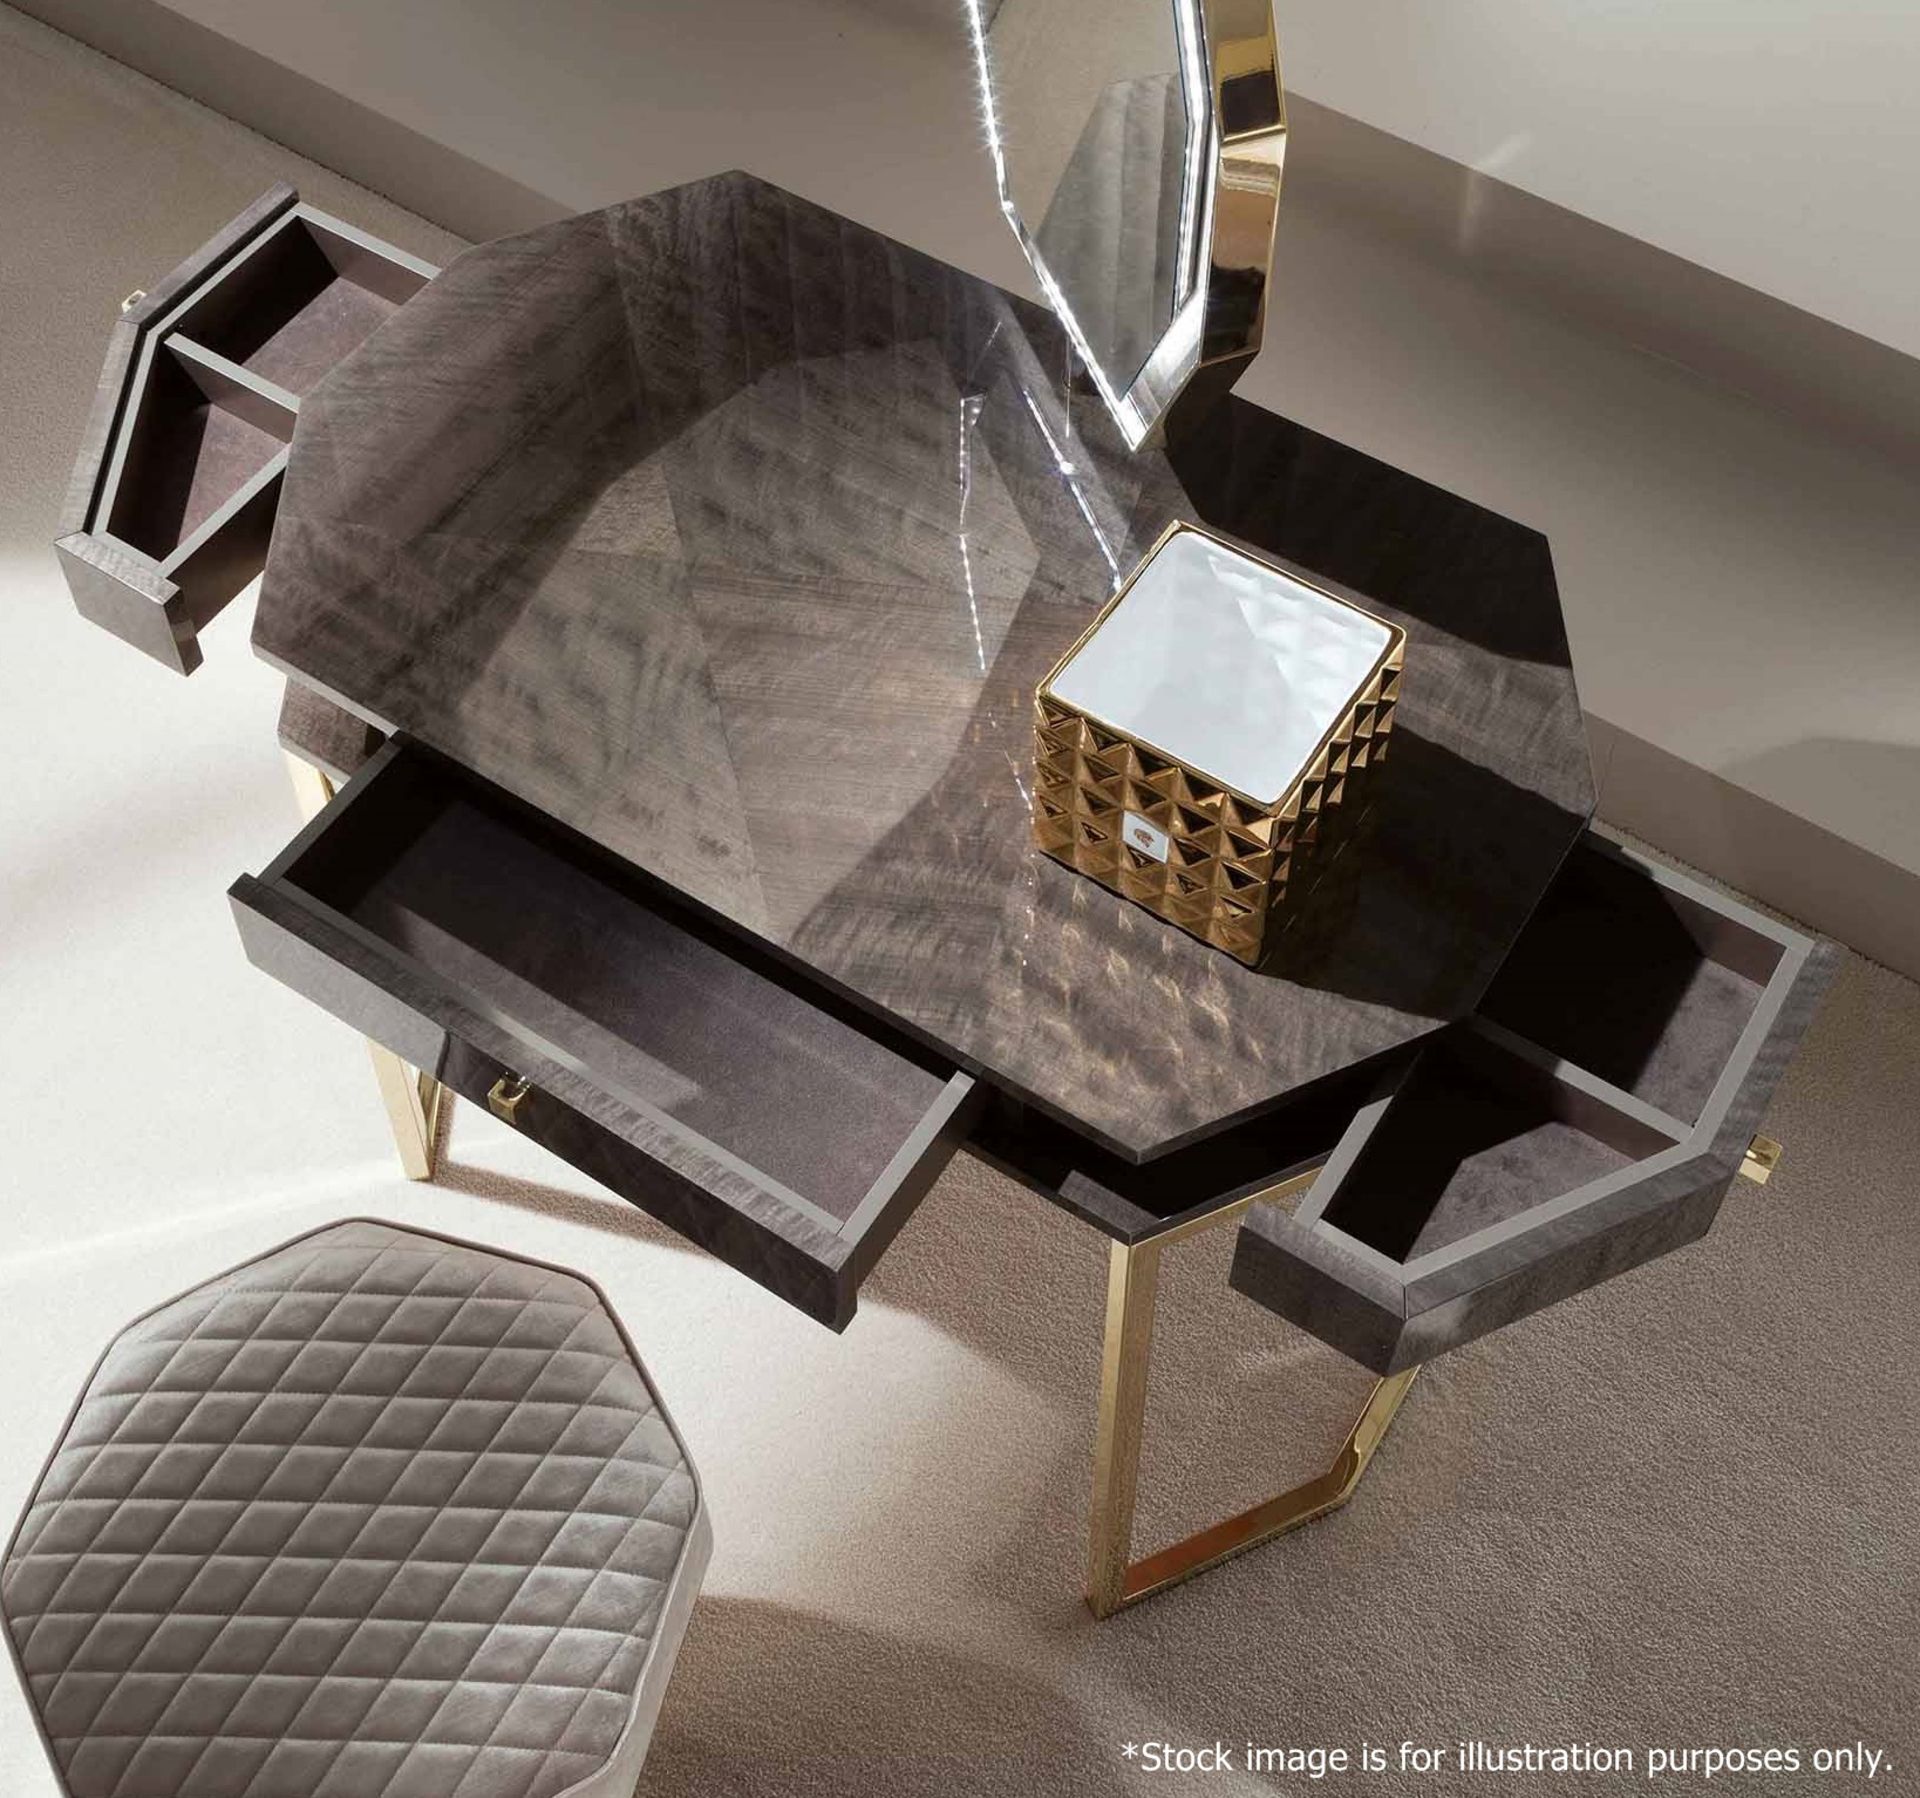 1 x GIORGIO COLLECTION 'Infinity' Luxury Italian Vanity Desk (5985) - Original RRP £5,040 - Image 3 of 12